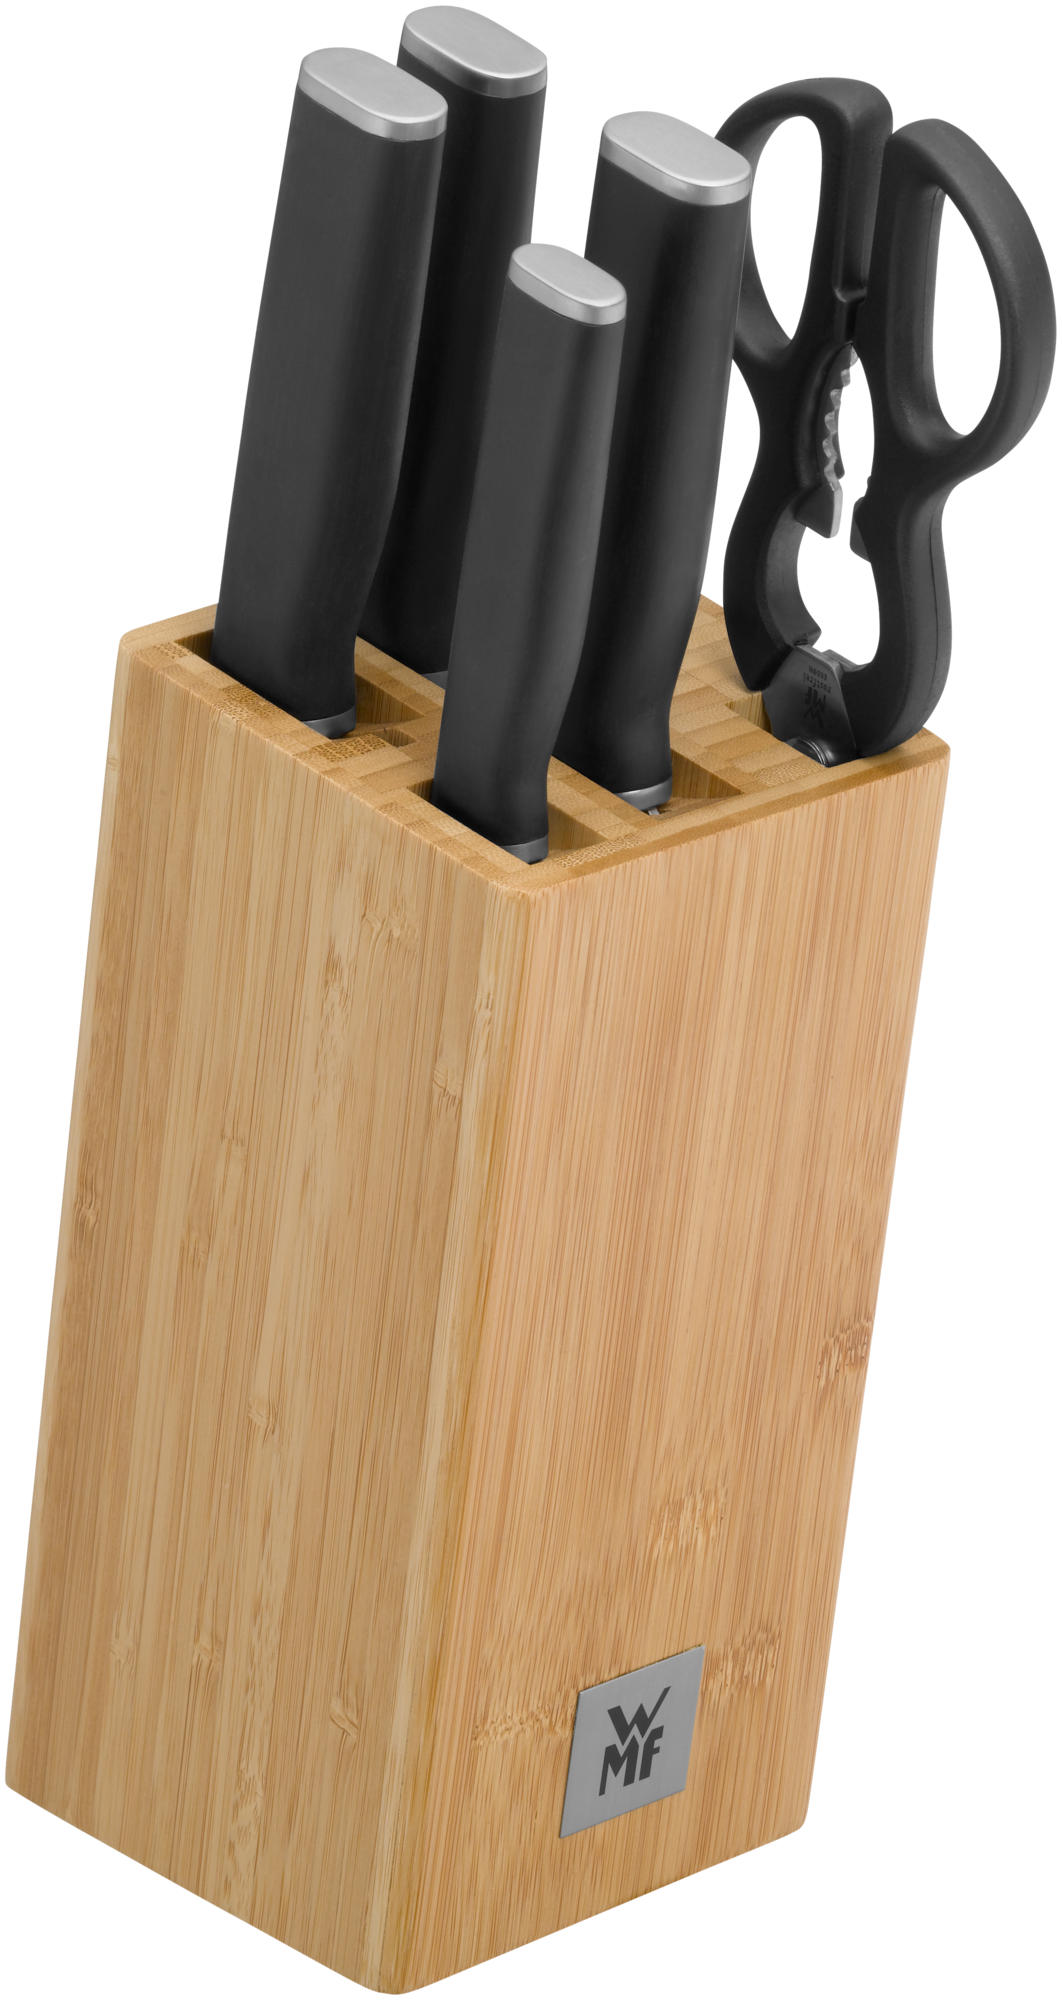 WMF Kineo Knife Block 6-Piece Set